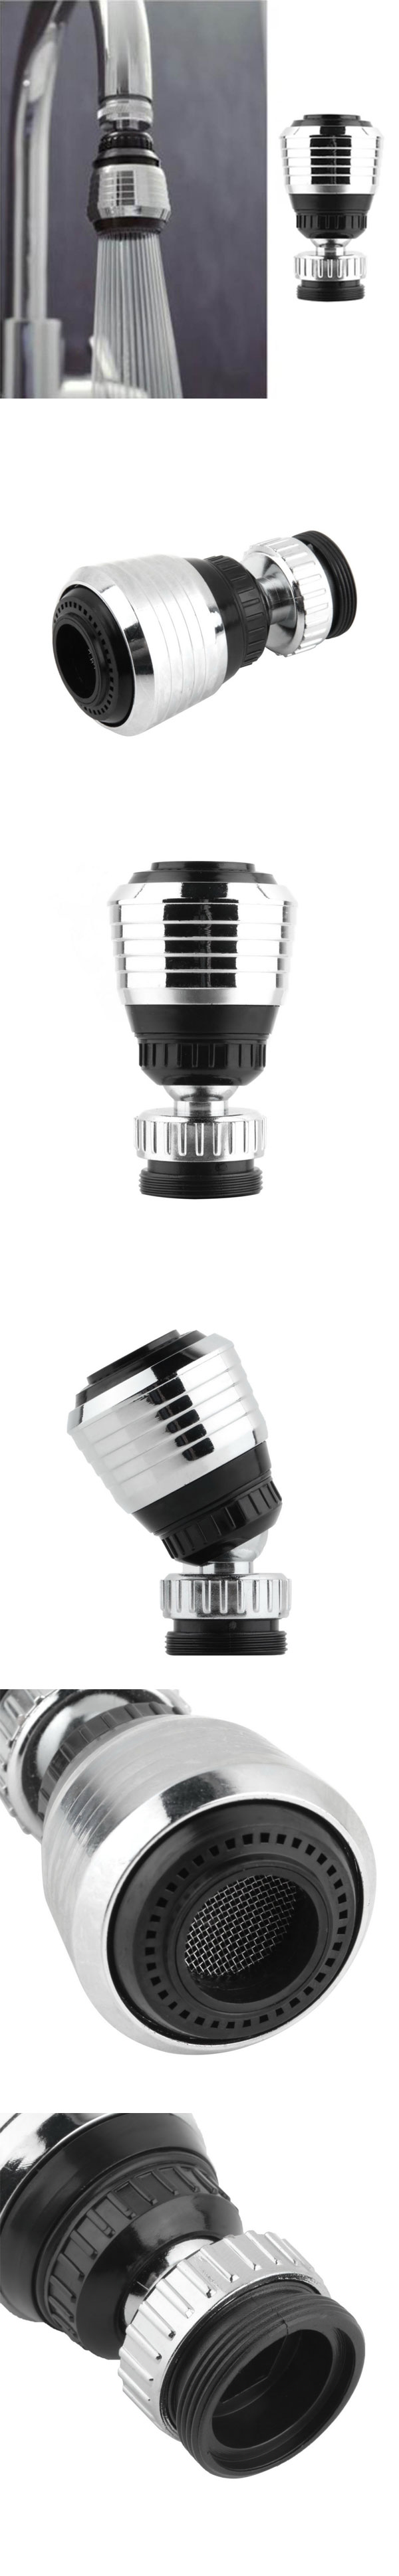 360deg-Rotate-Tap-Bubbler-Filter-Aerator-Net-Water-Saving-Device-Nozzle-Faucet-Fitting-943078